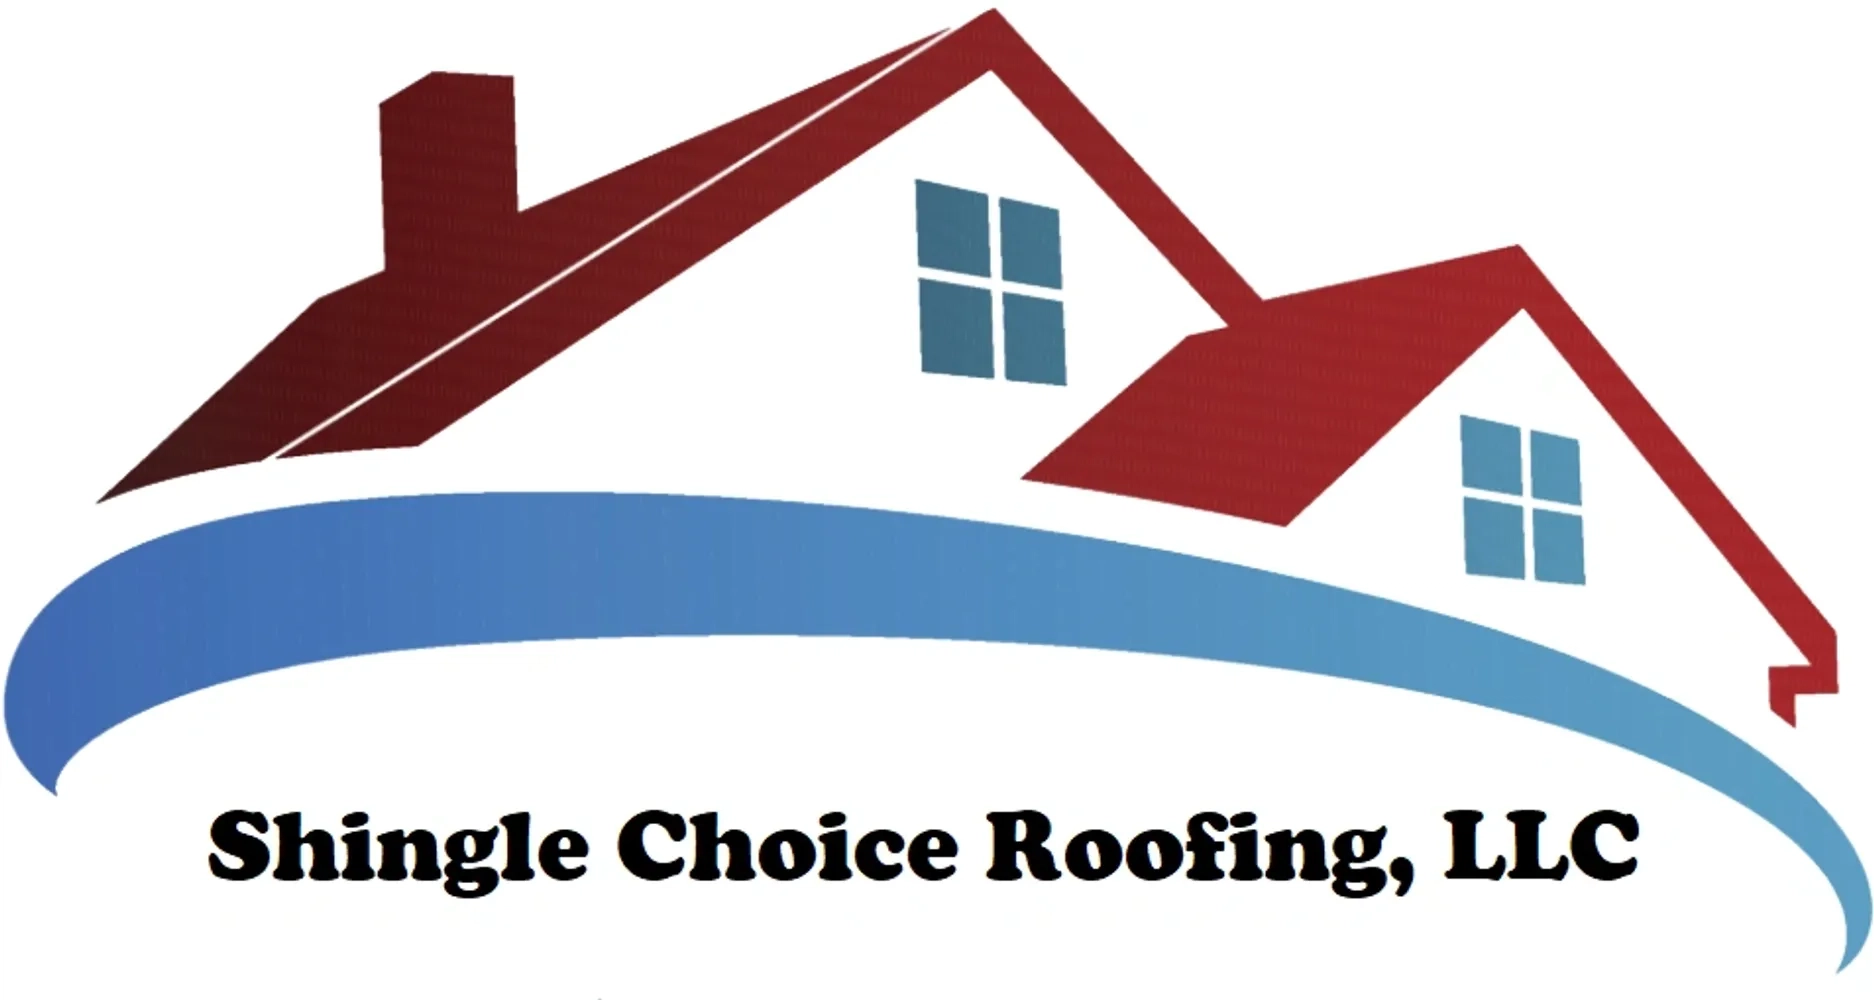 Shingle Choice Roofing, LLC Logo